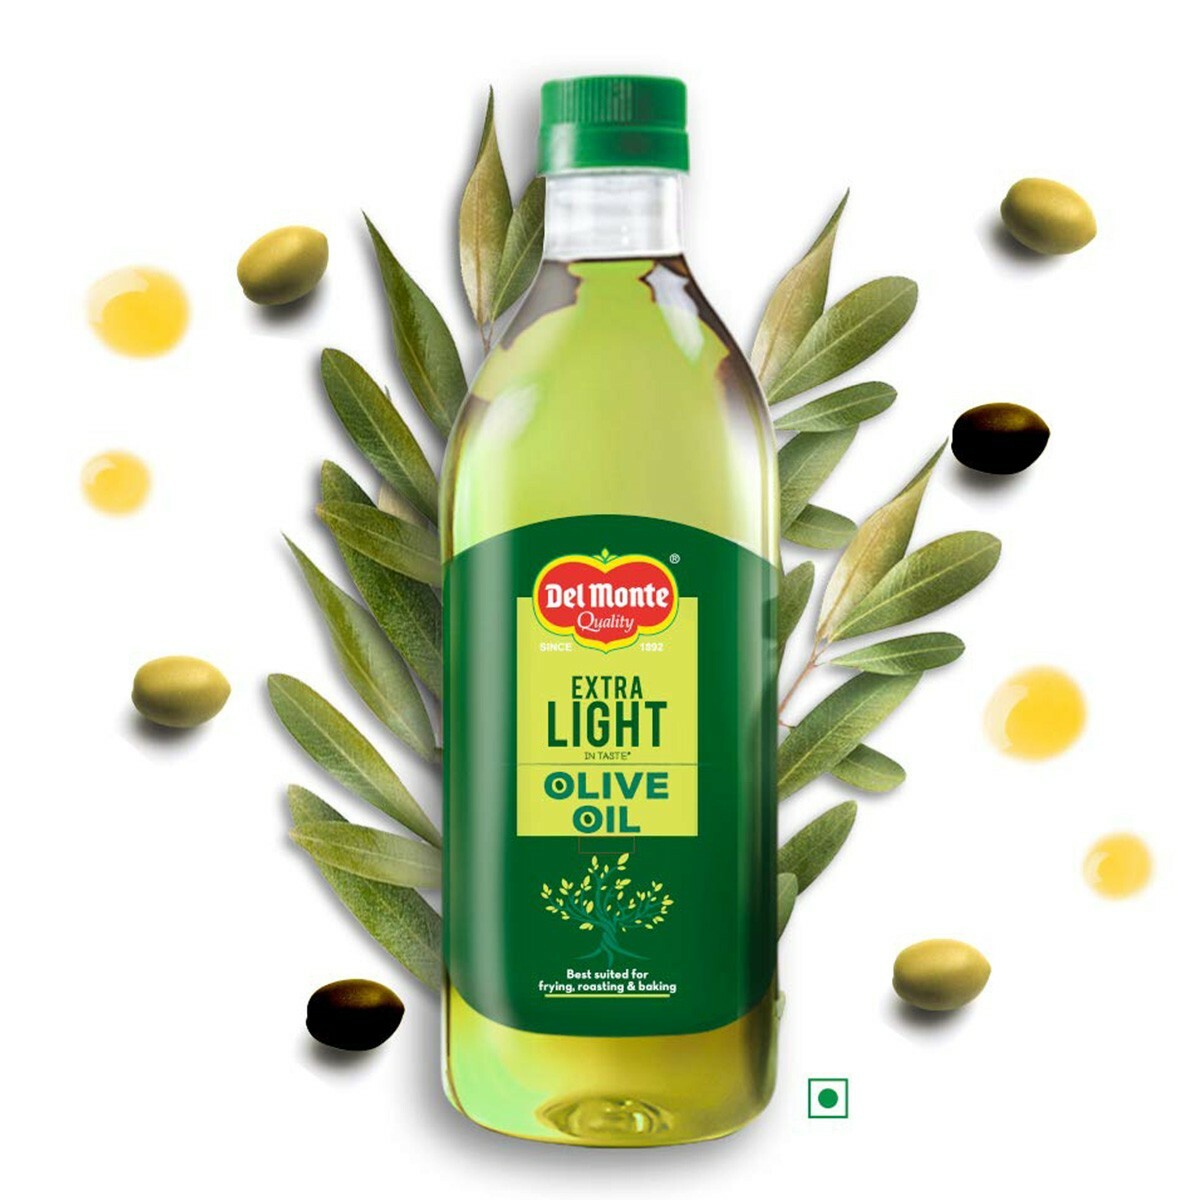 Delmonte Light Olive Oil Pet Bottle 1L